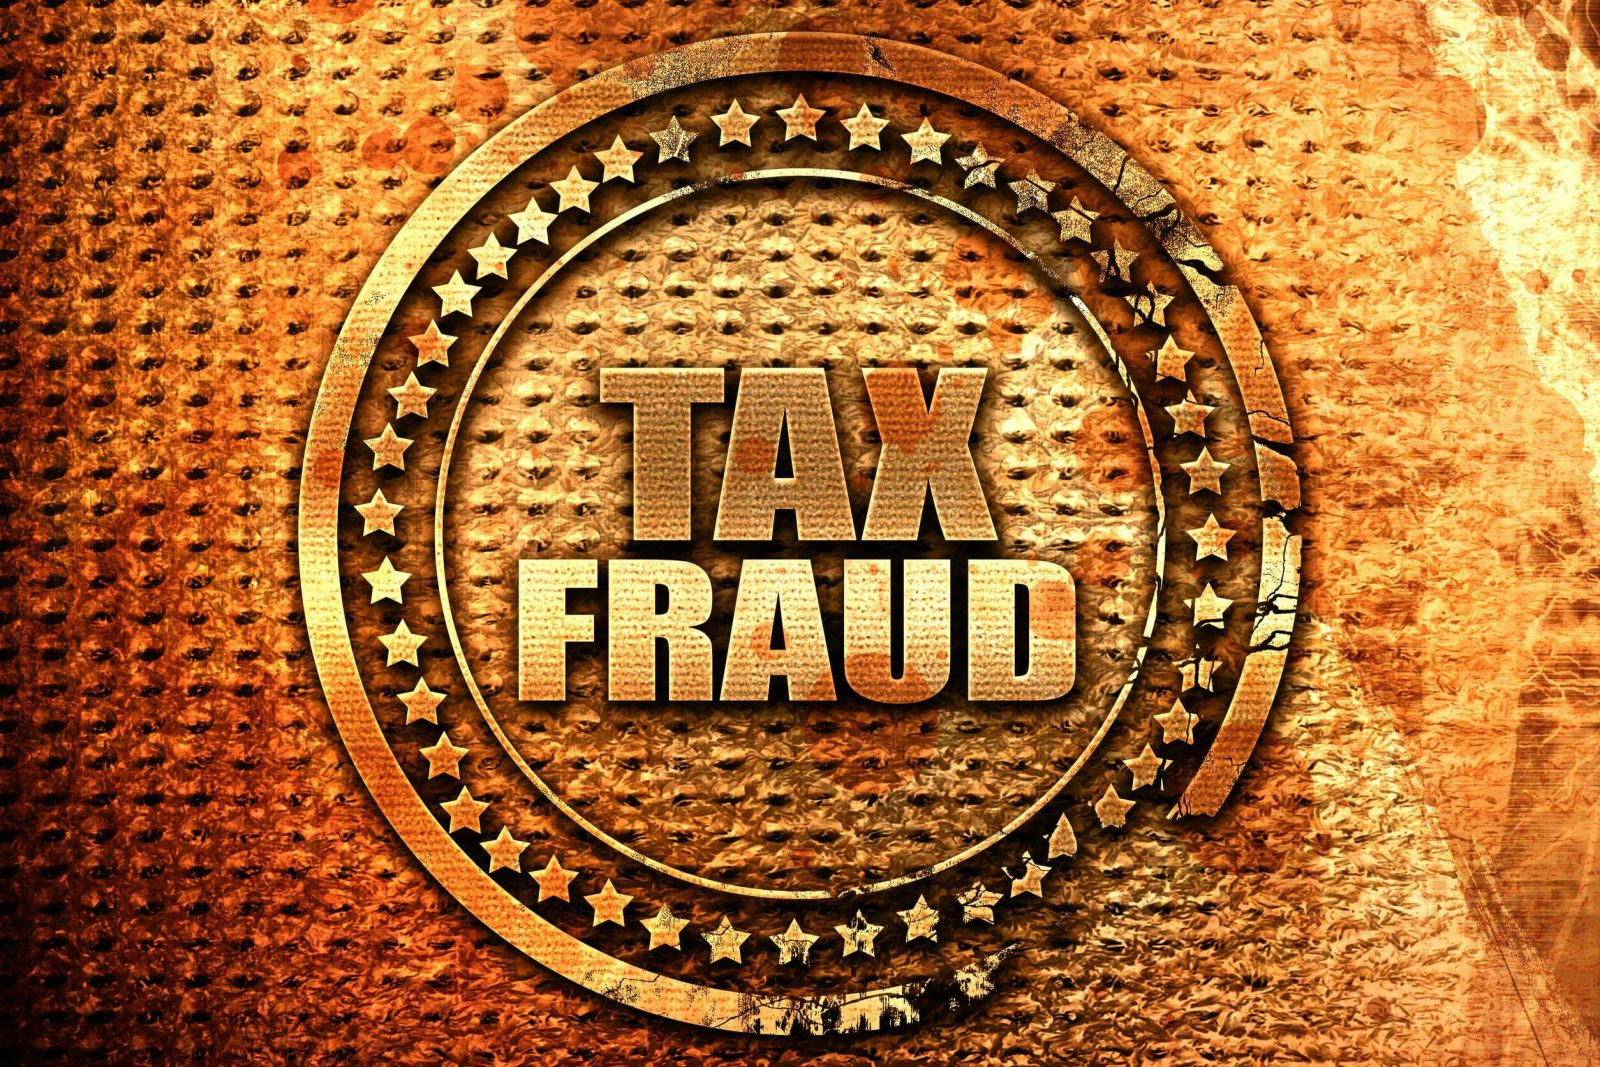 Jacksonville, Florida Tax Preparers Facing Three Years in Tax Fraud Case